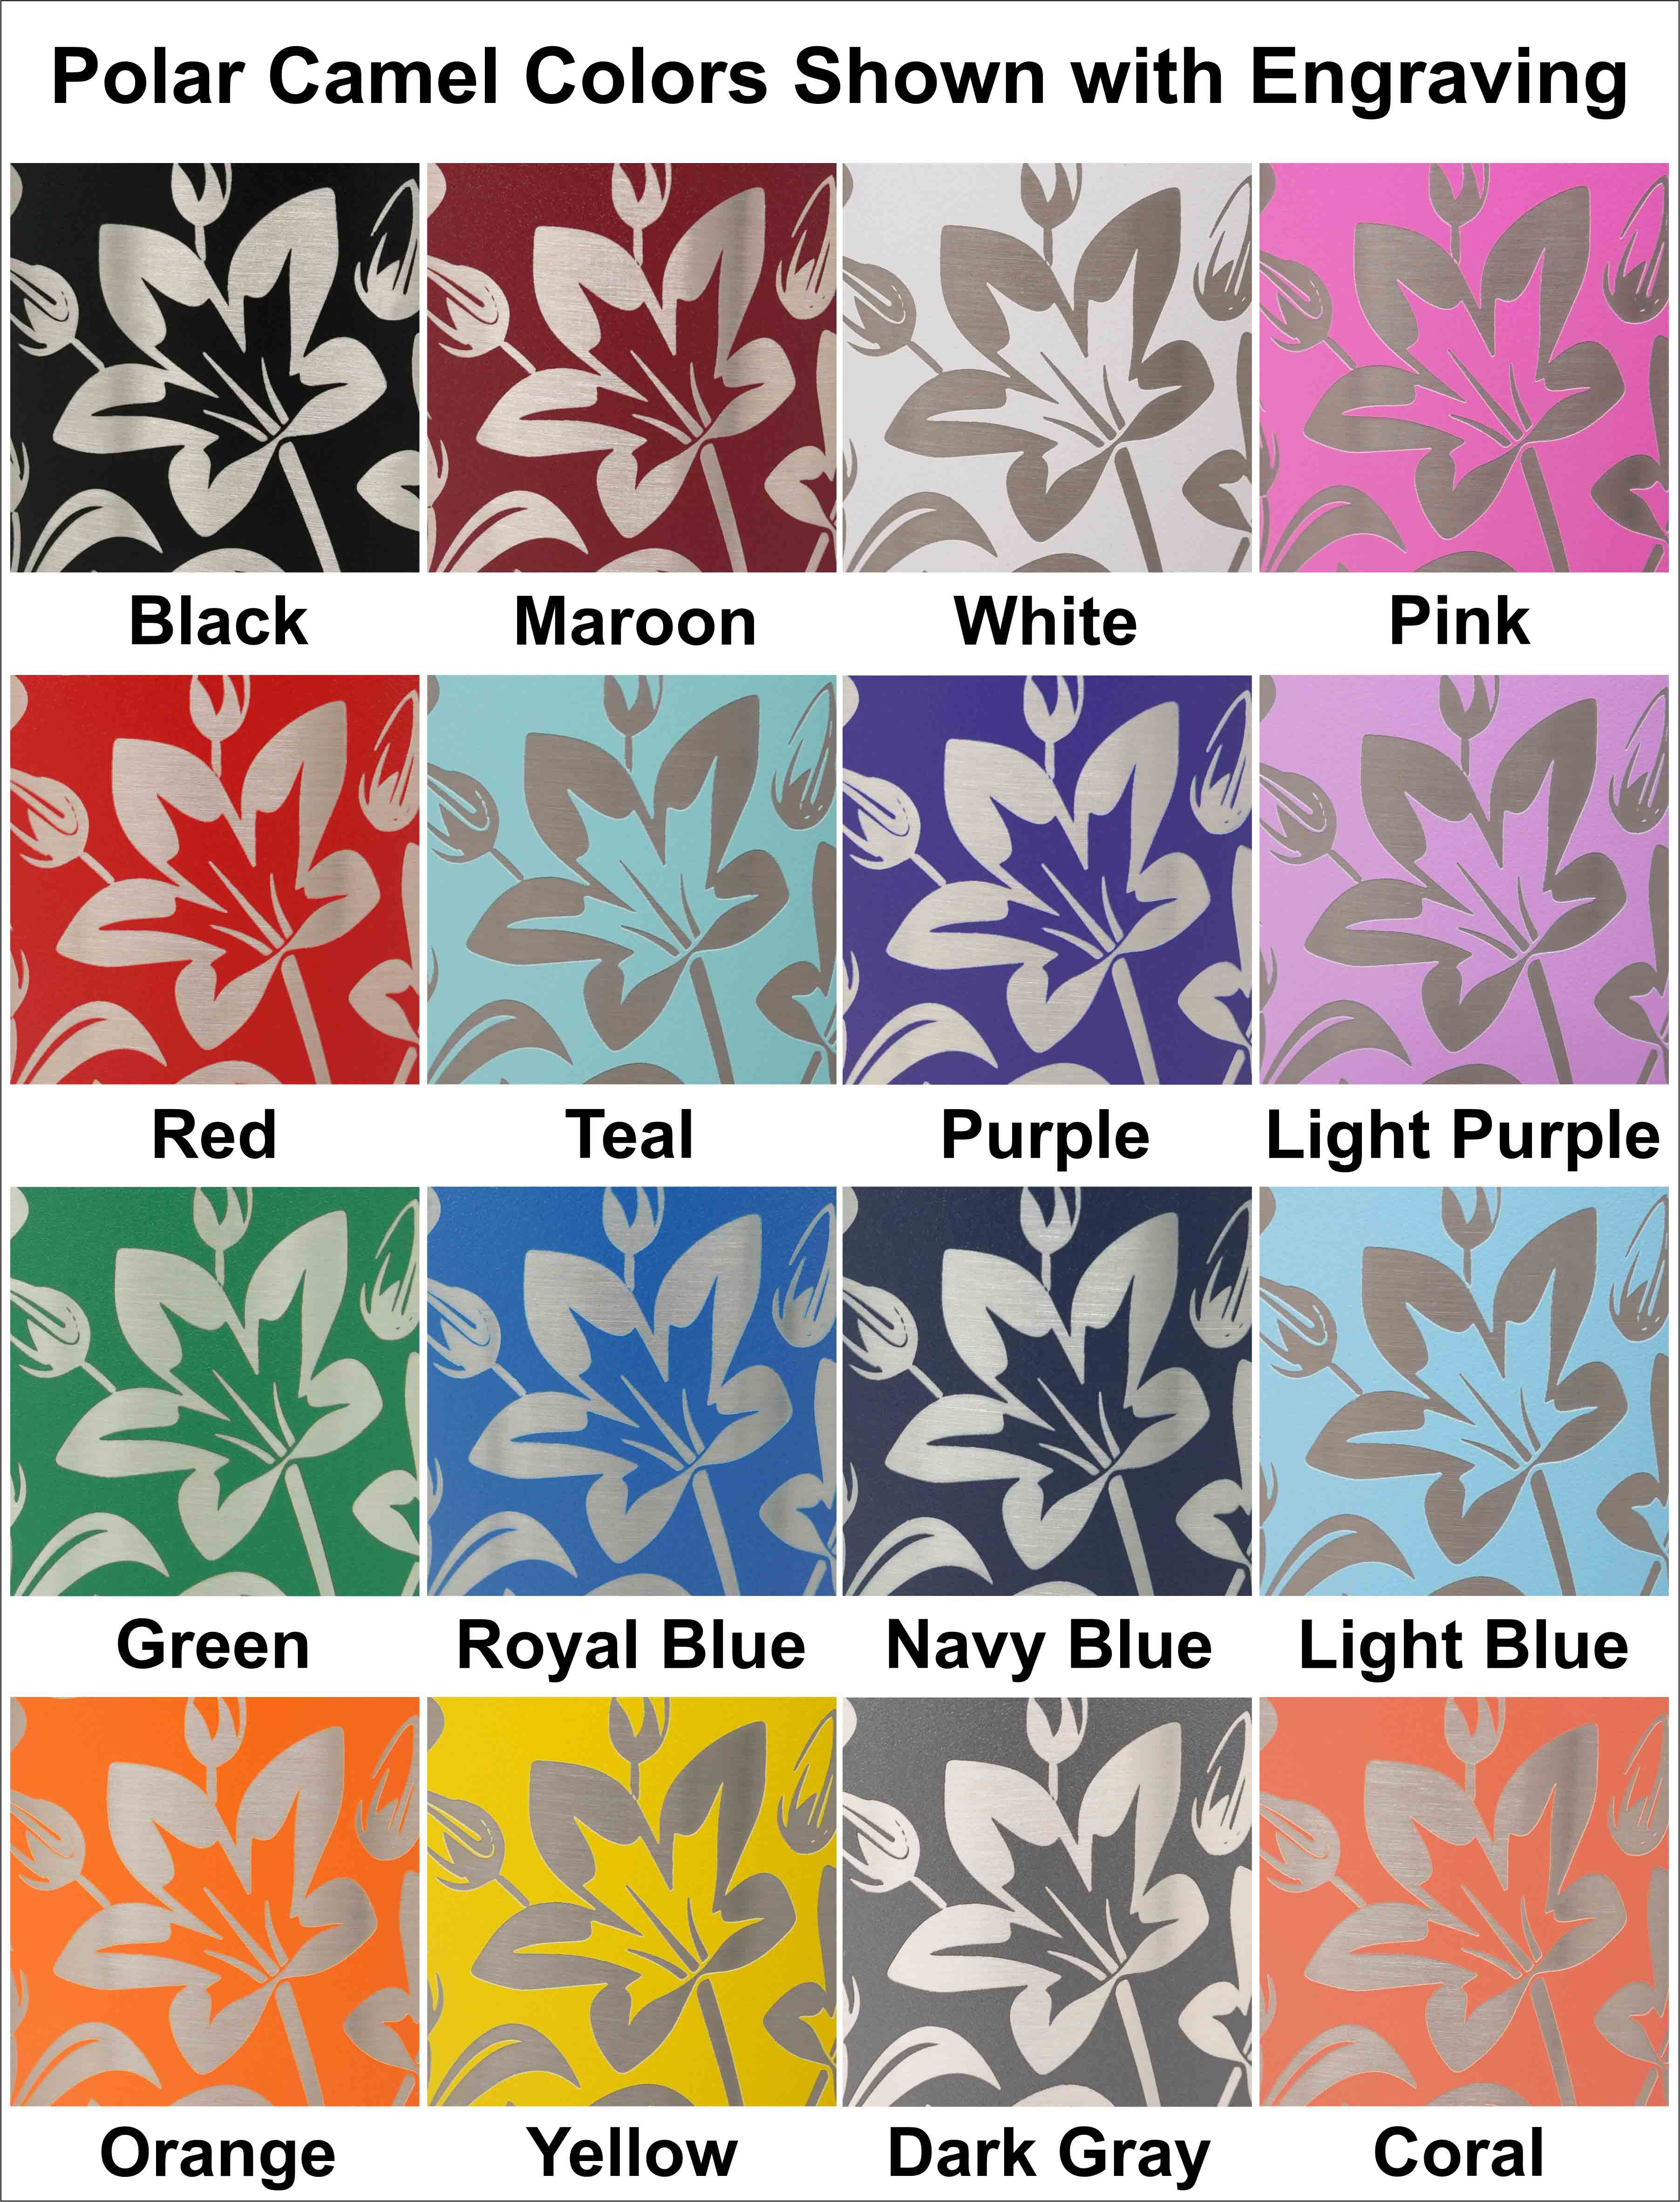 Laser engraved lily flower pattern shown in each Polar Camel tumbler color.